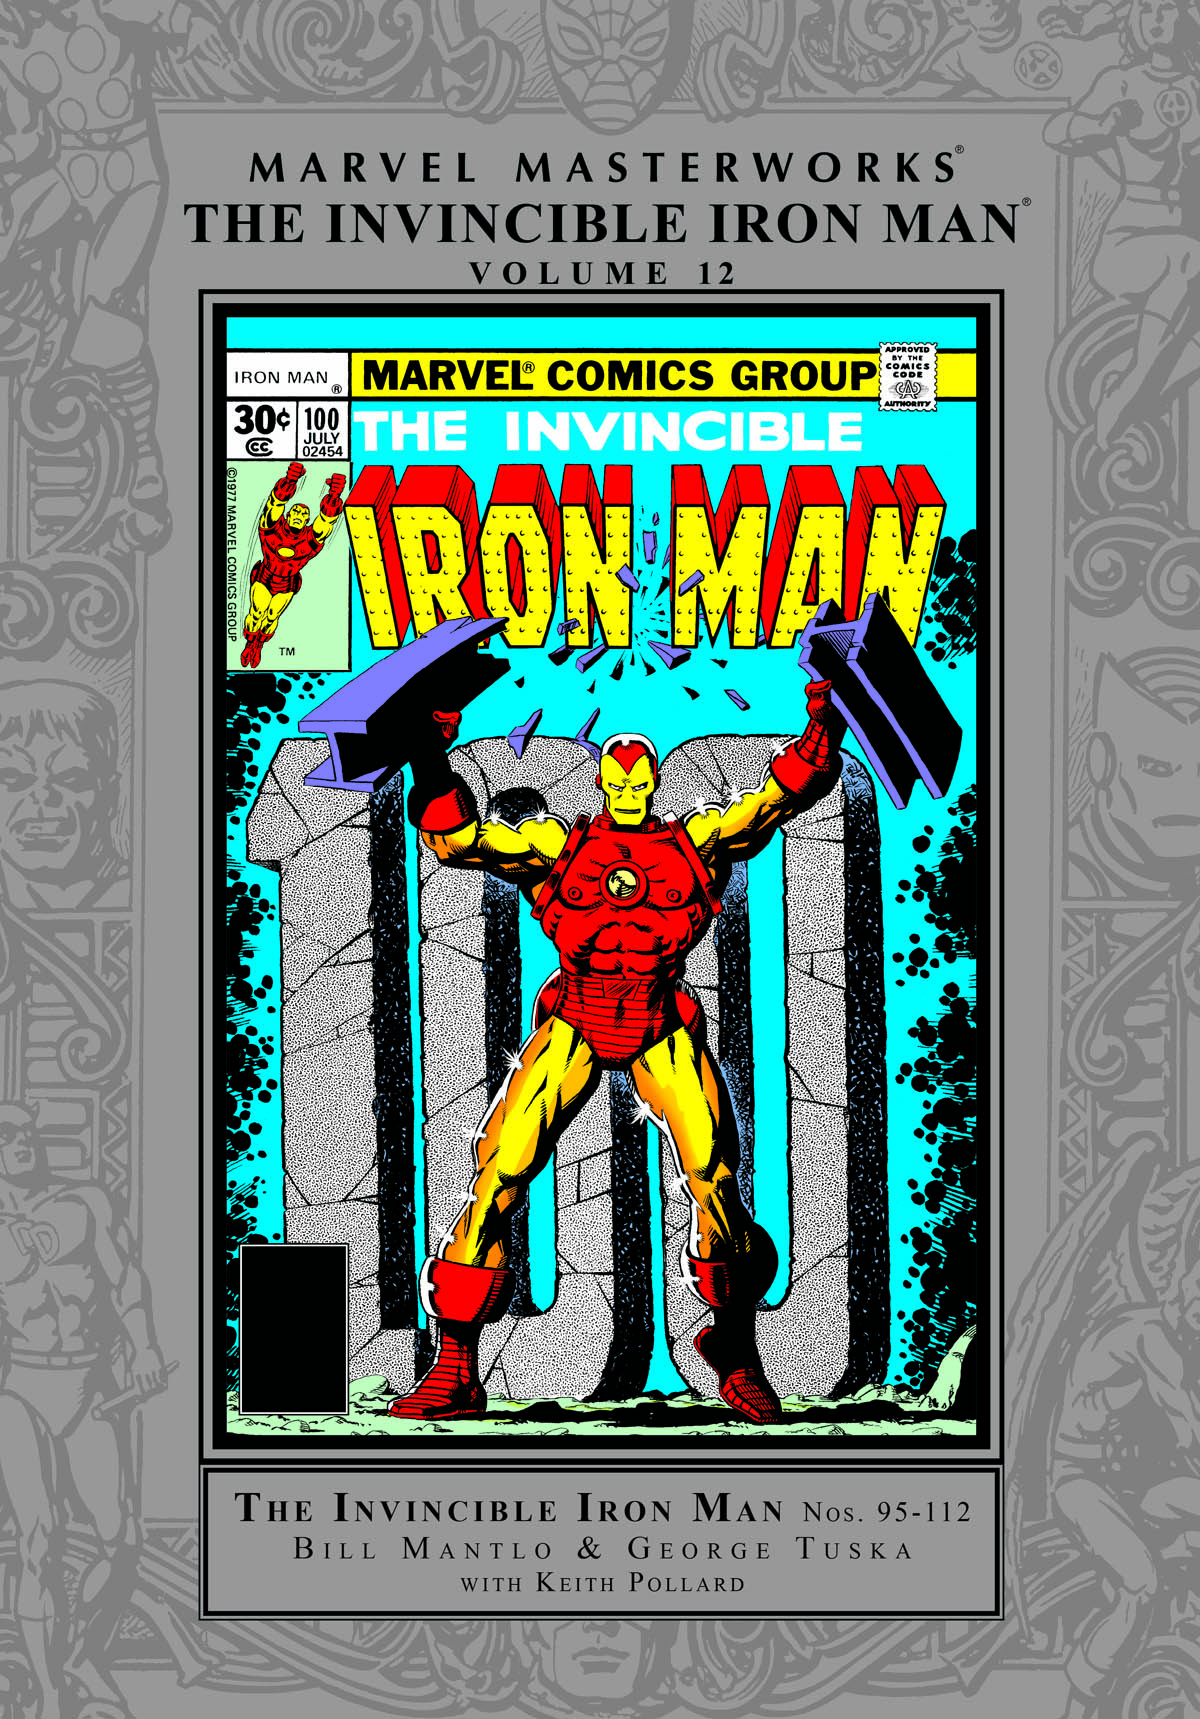 Marvel Masterworks: The Invincible Iron Man Vol. 12 (Trade Paperback)